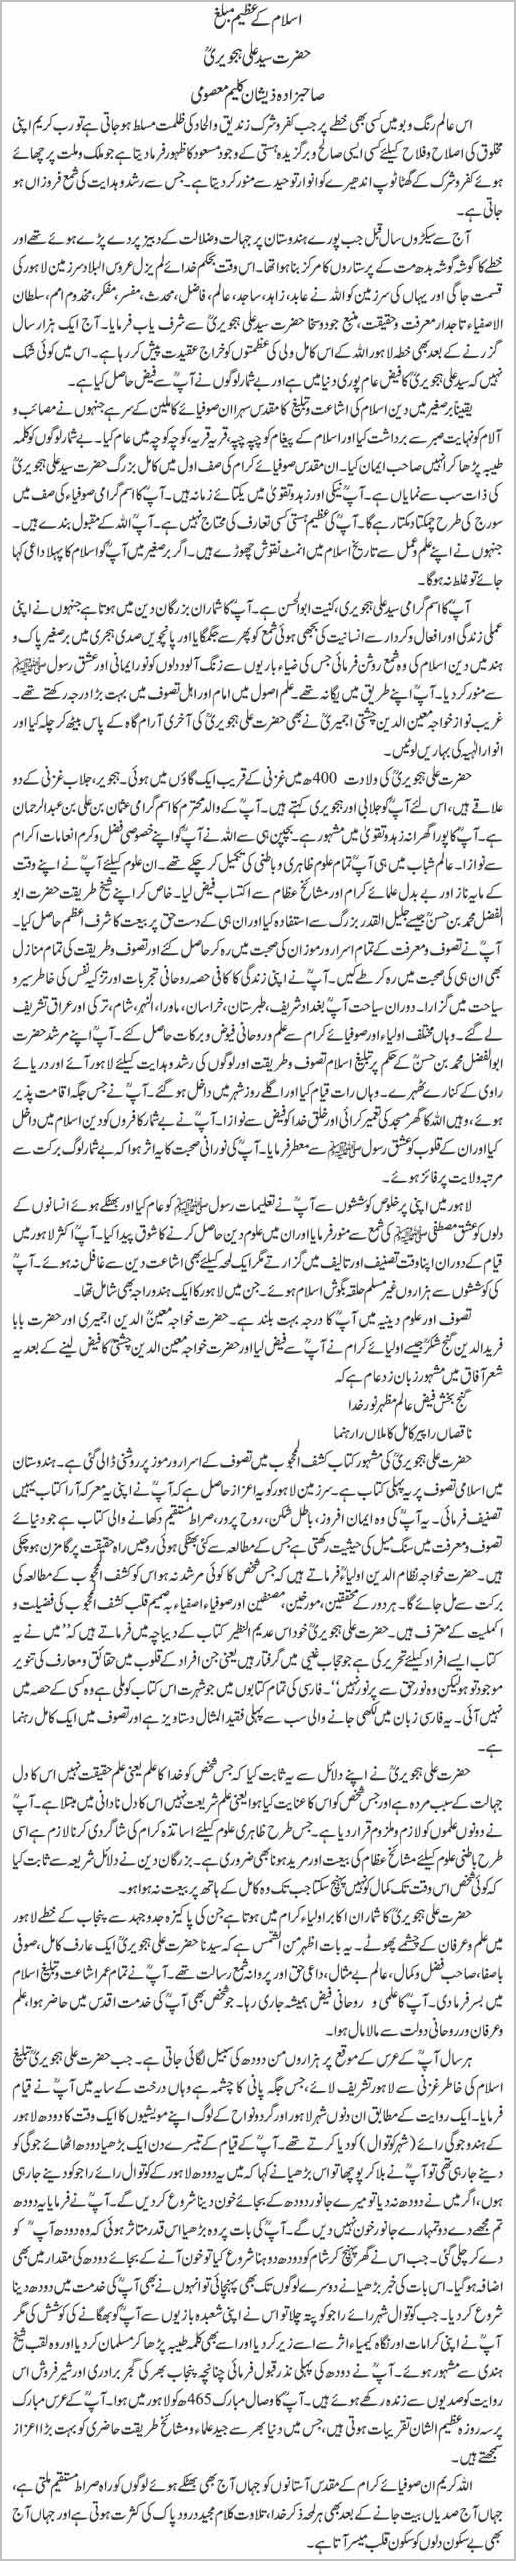 Biography of Hazrat Ali Hujwiri, Miracles, Teachings, Books, Urs (Urdu-English)